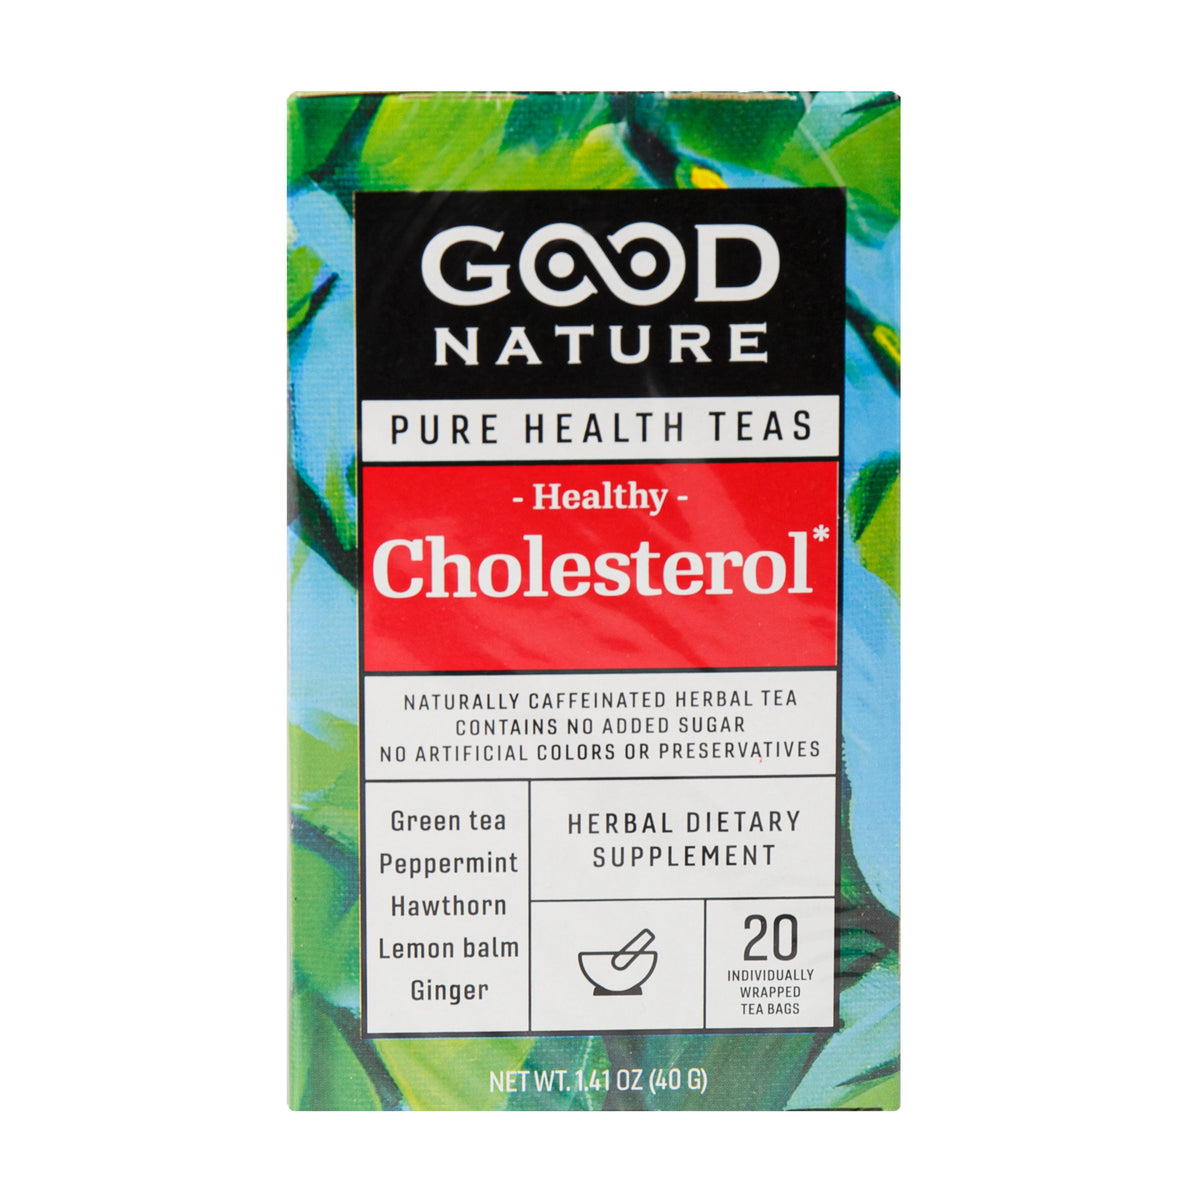 Primary image of Healthy Cholesterol Tea